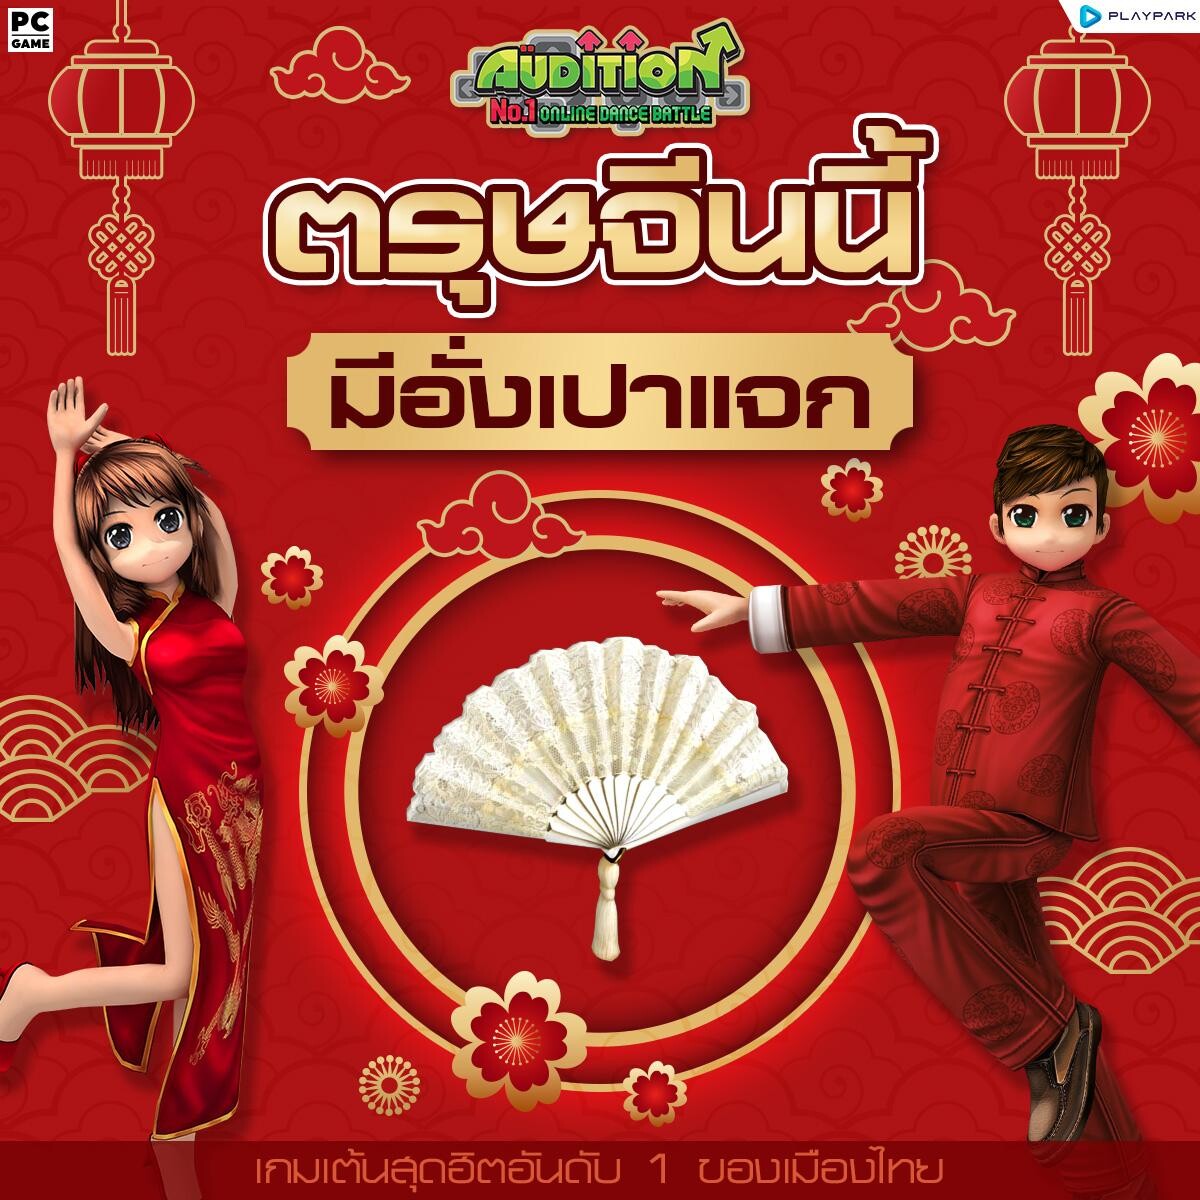 PlayPark ชวนมันส์…สุขสันต์วันตรุษจีน HAPPY CHINESE NEW YEAR 2023